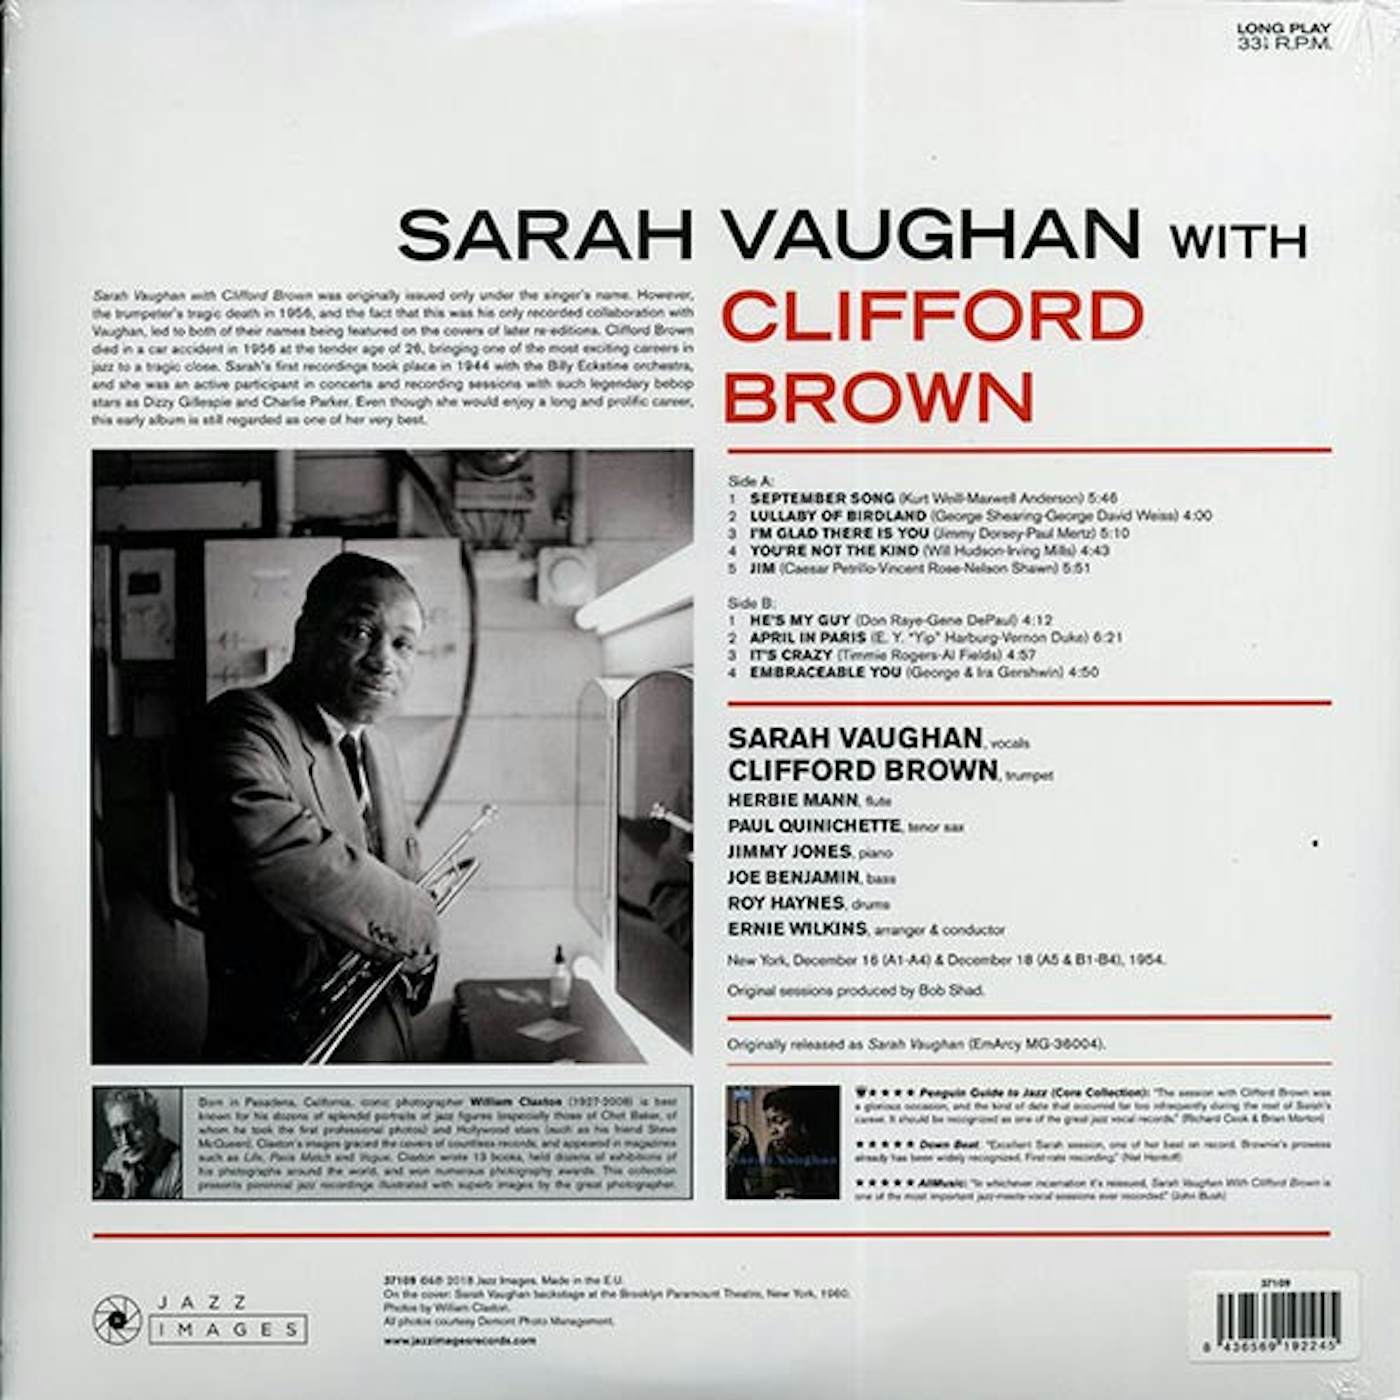 Sarah Vaughan, Clifford Brown  LP -  Sarah Vaughan With Clifford Brown (ltd. ed.) (180g) (Vinyl)